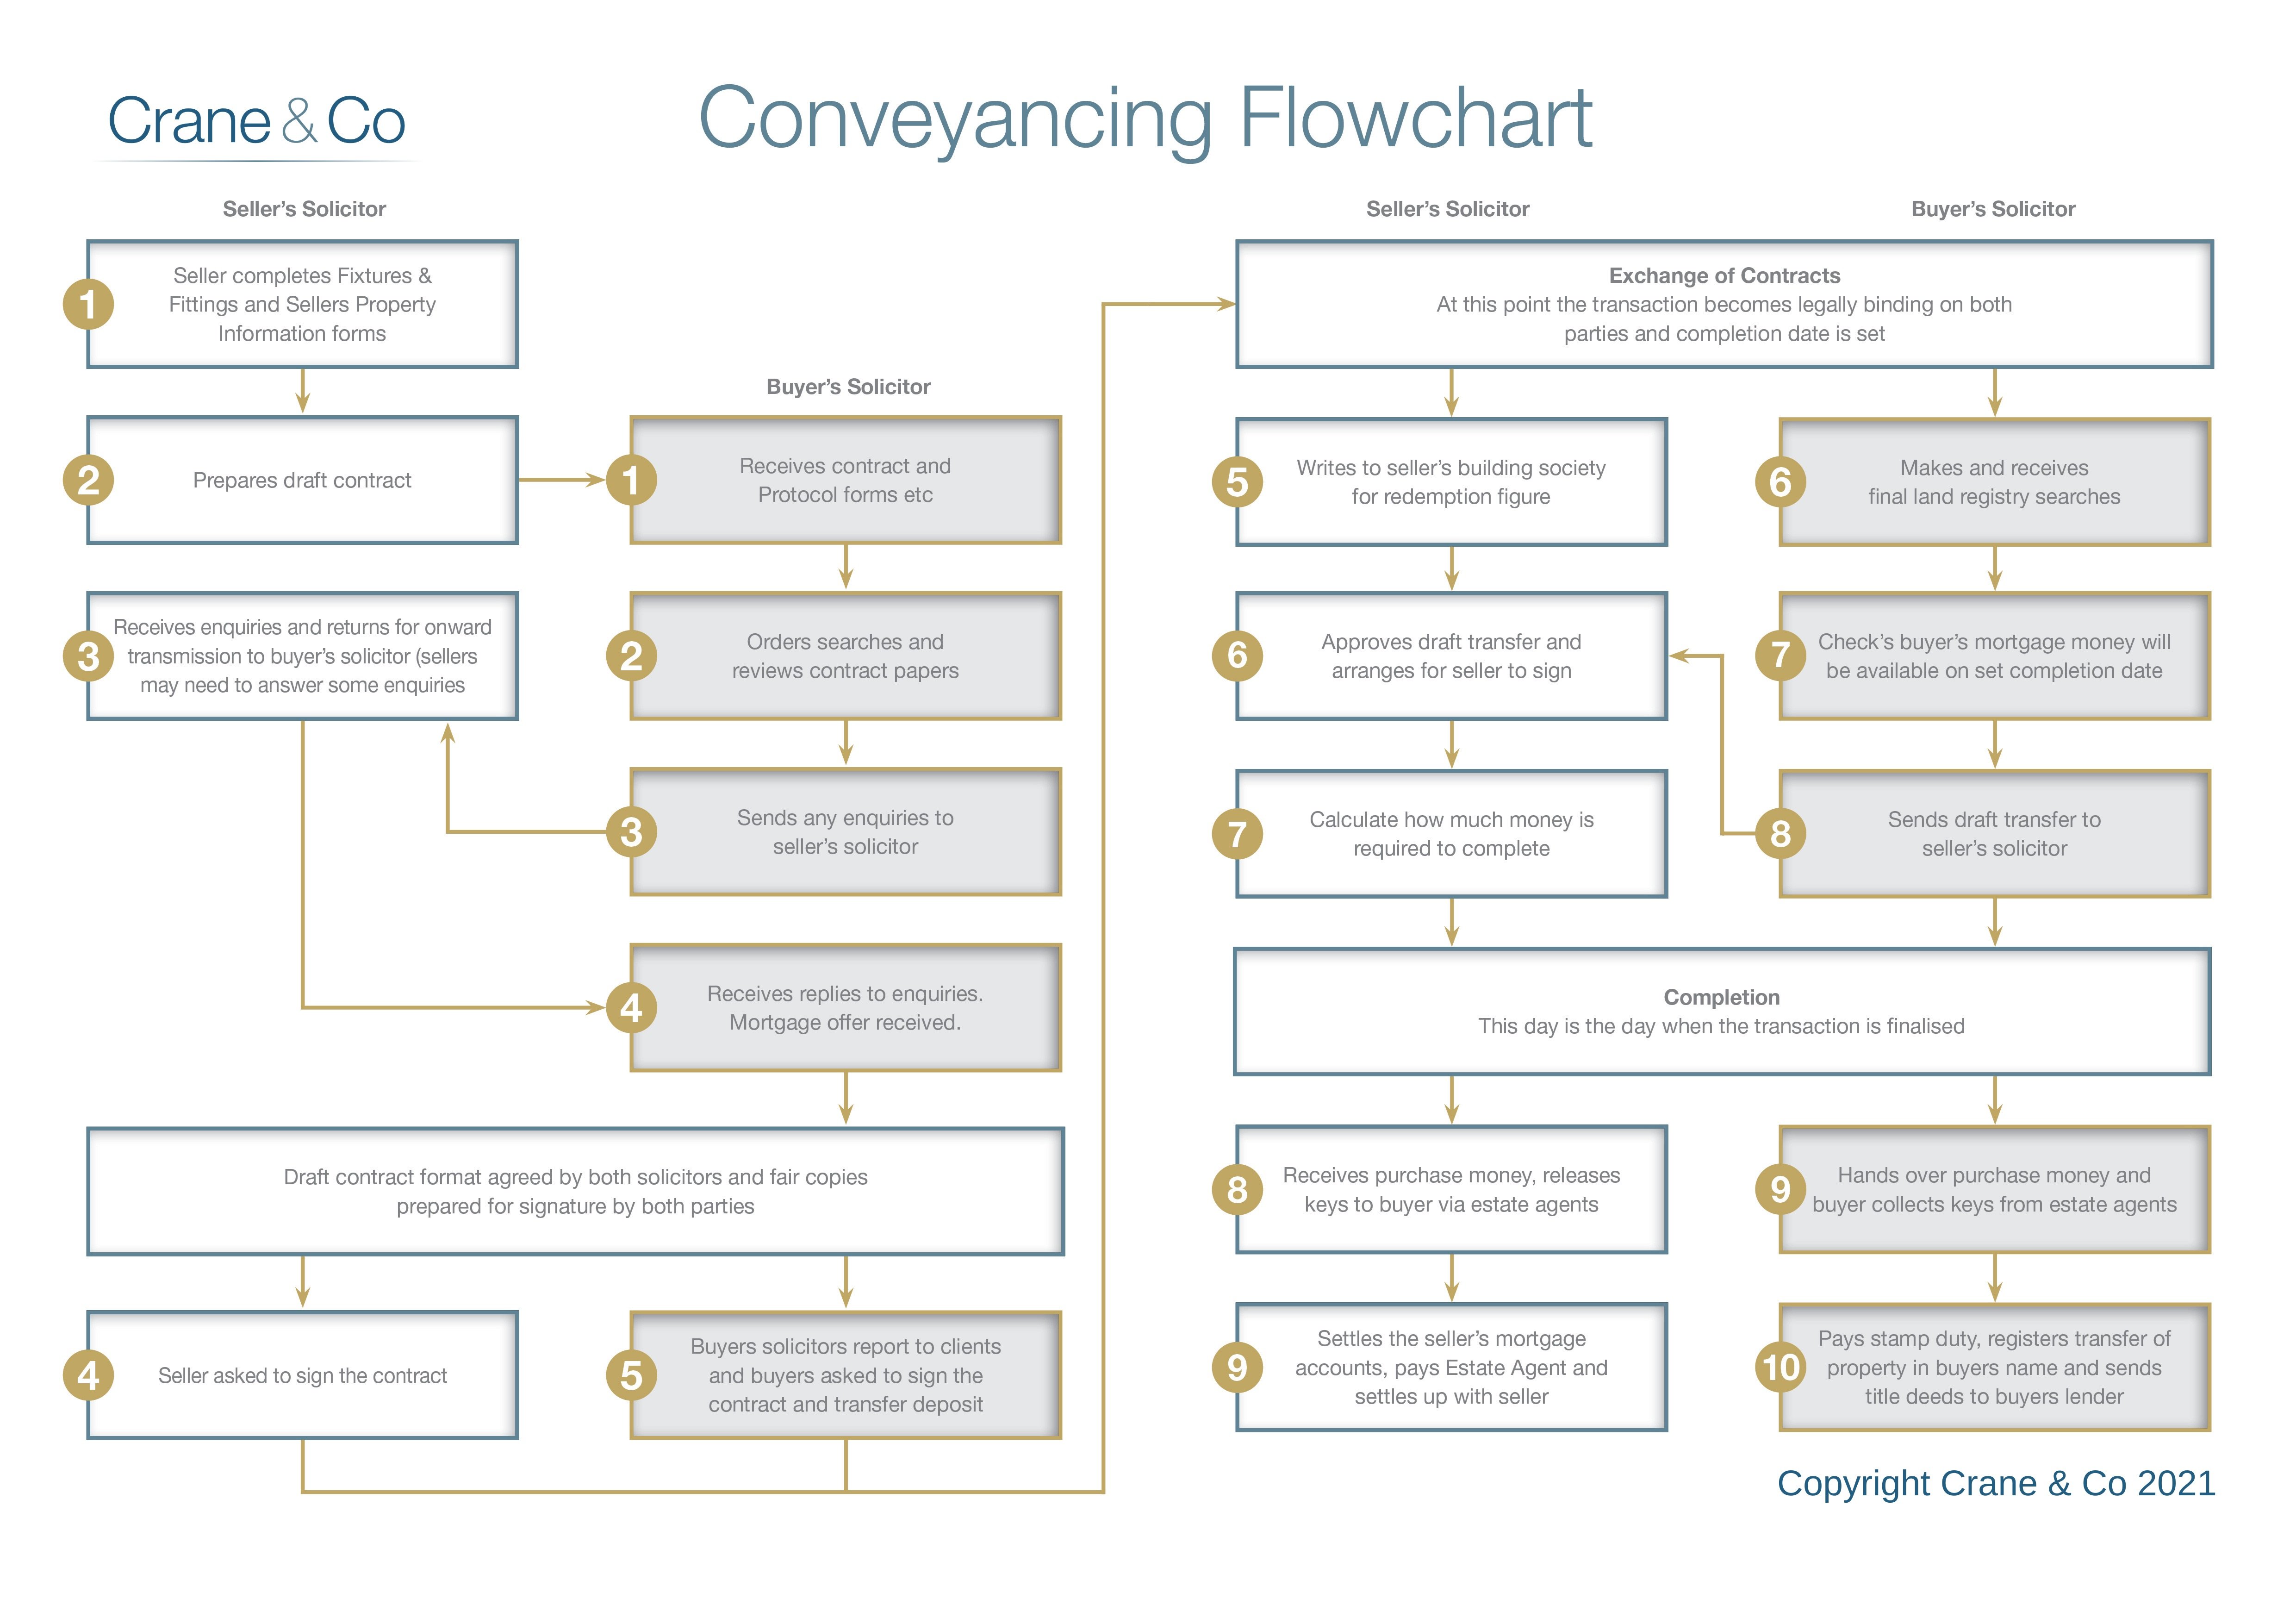 Conveyancing Flowchart Copyright Crane & Co